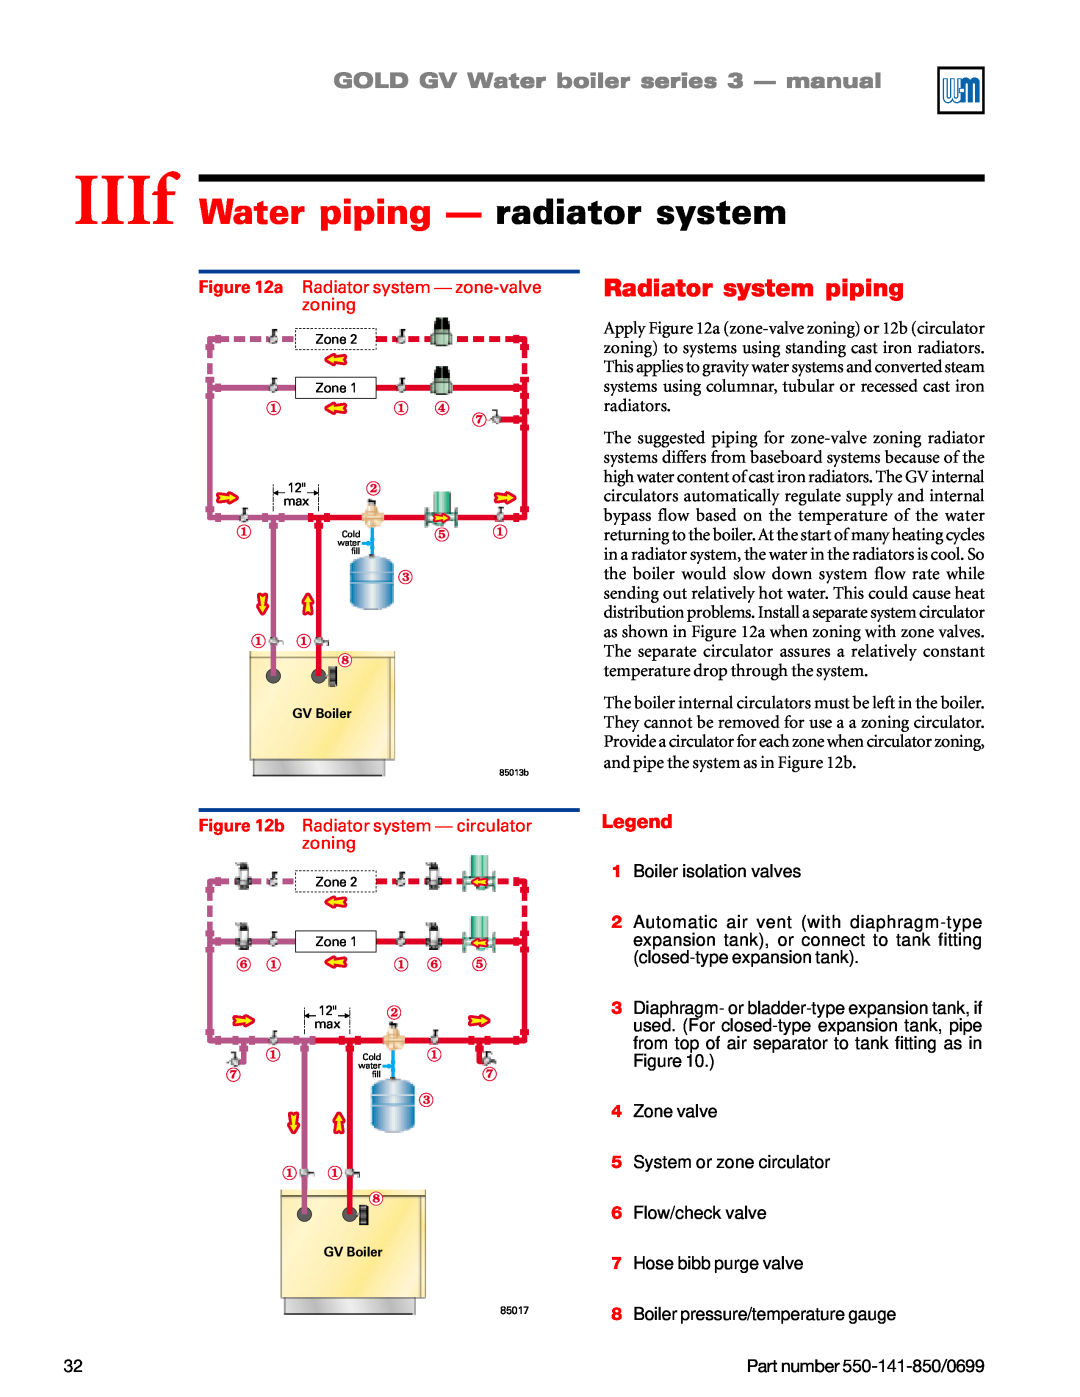 Weil-McLain GOLD DV WATER BOILER, 550-141-850/0599 IIIf Water piping — radiator system, Radiator system piping, Legend 